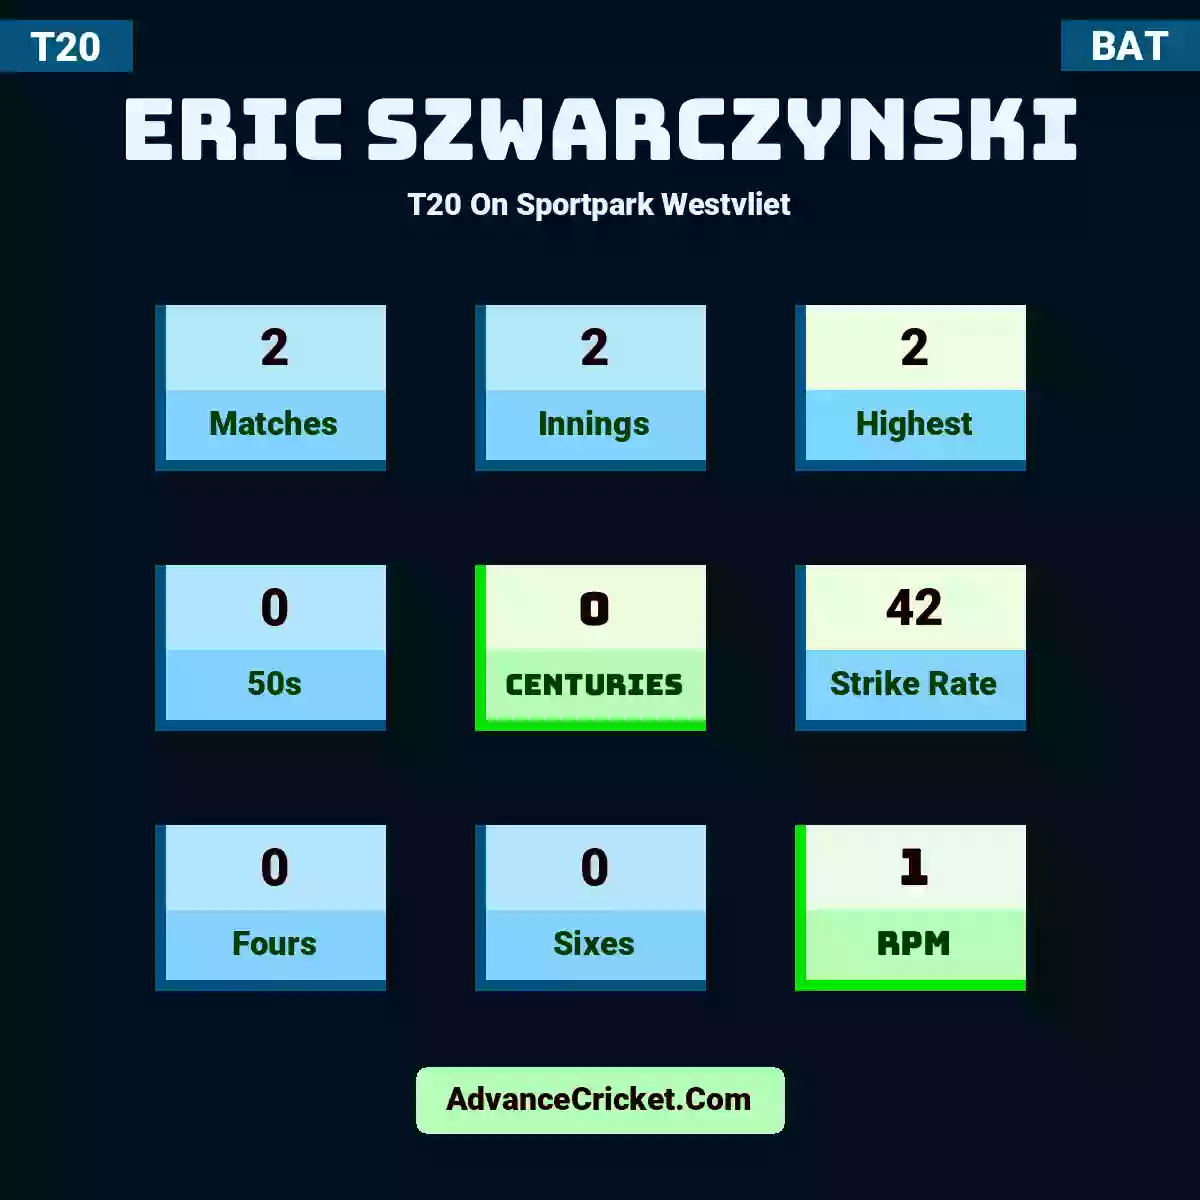 Eric Szwarczynski T20  On Sportpark Westvliet, Eric Szwarczynski played 2 matches, scored 2 runs as highest, 0 half-centuries, and 0 centuries, with a strike rate of 42. E.Szwarczynski hit 0 fours and 0 sixes, with an RPM of 1.